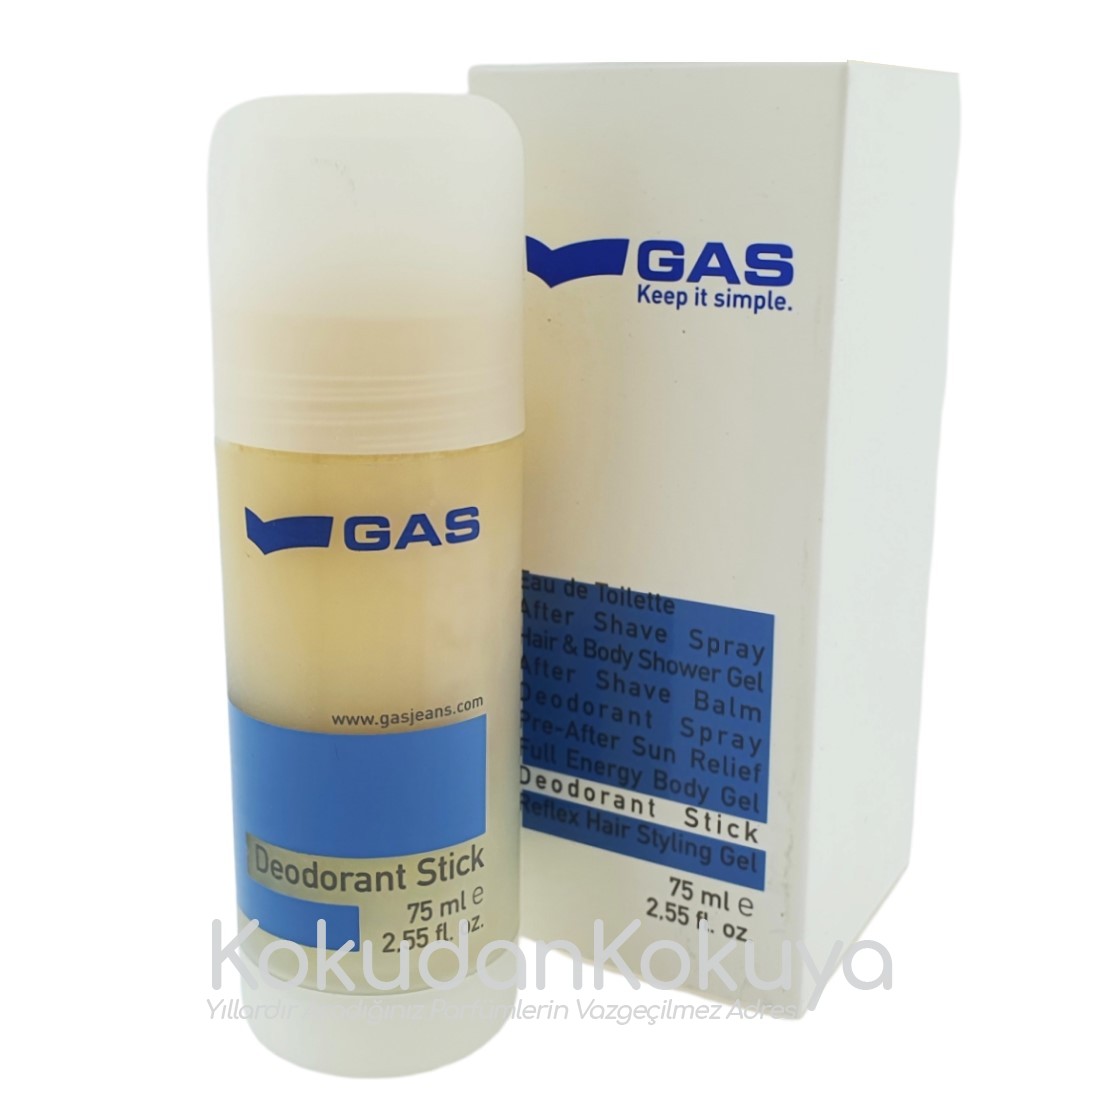 GAS Gas for Men (Vintage) Deodorant Erkek 75ml Deodorant Stick 